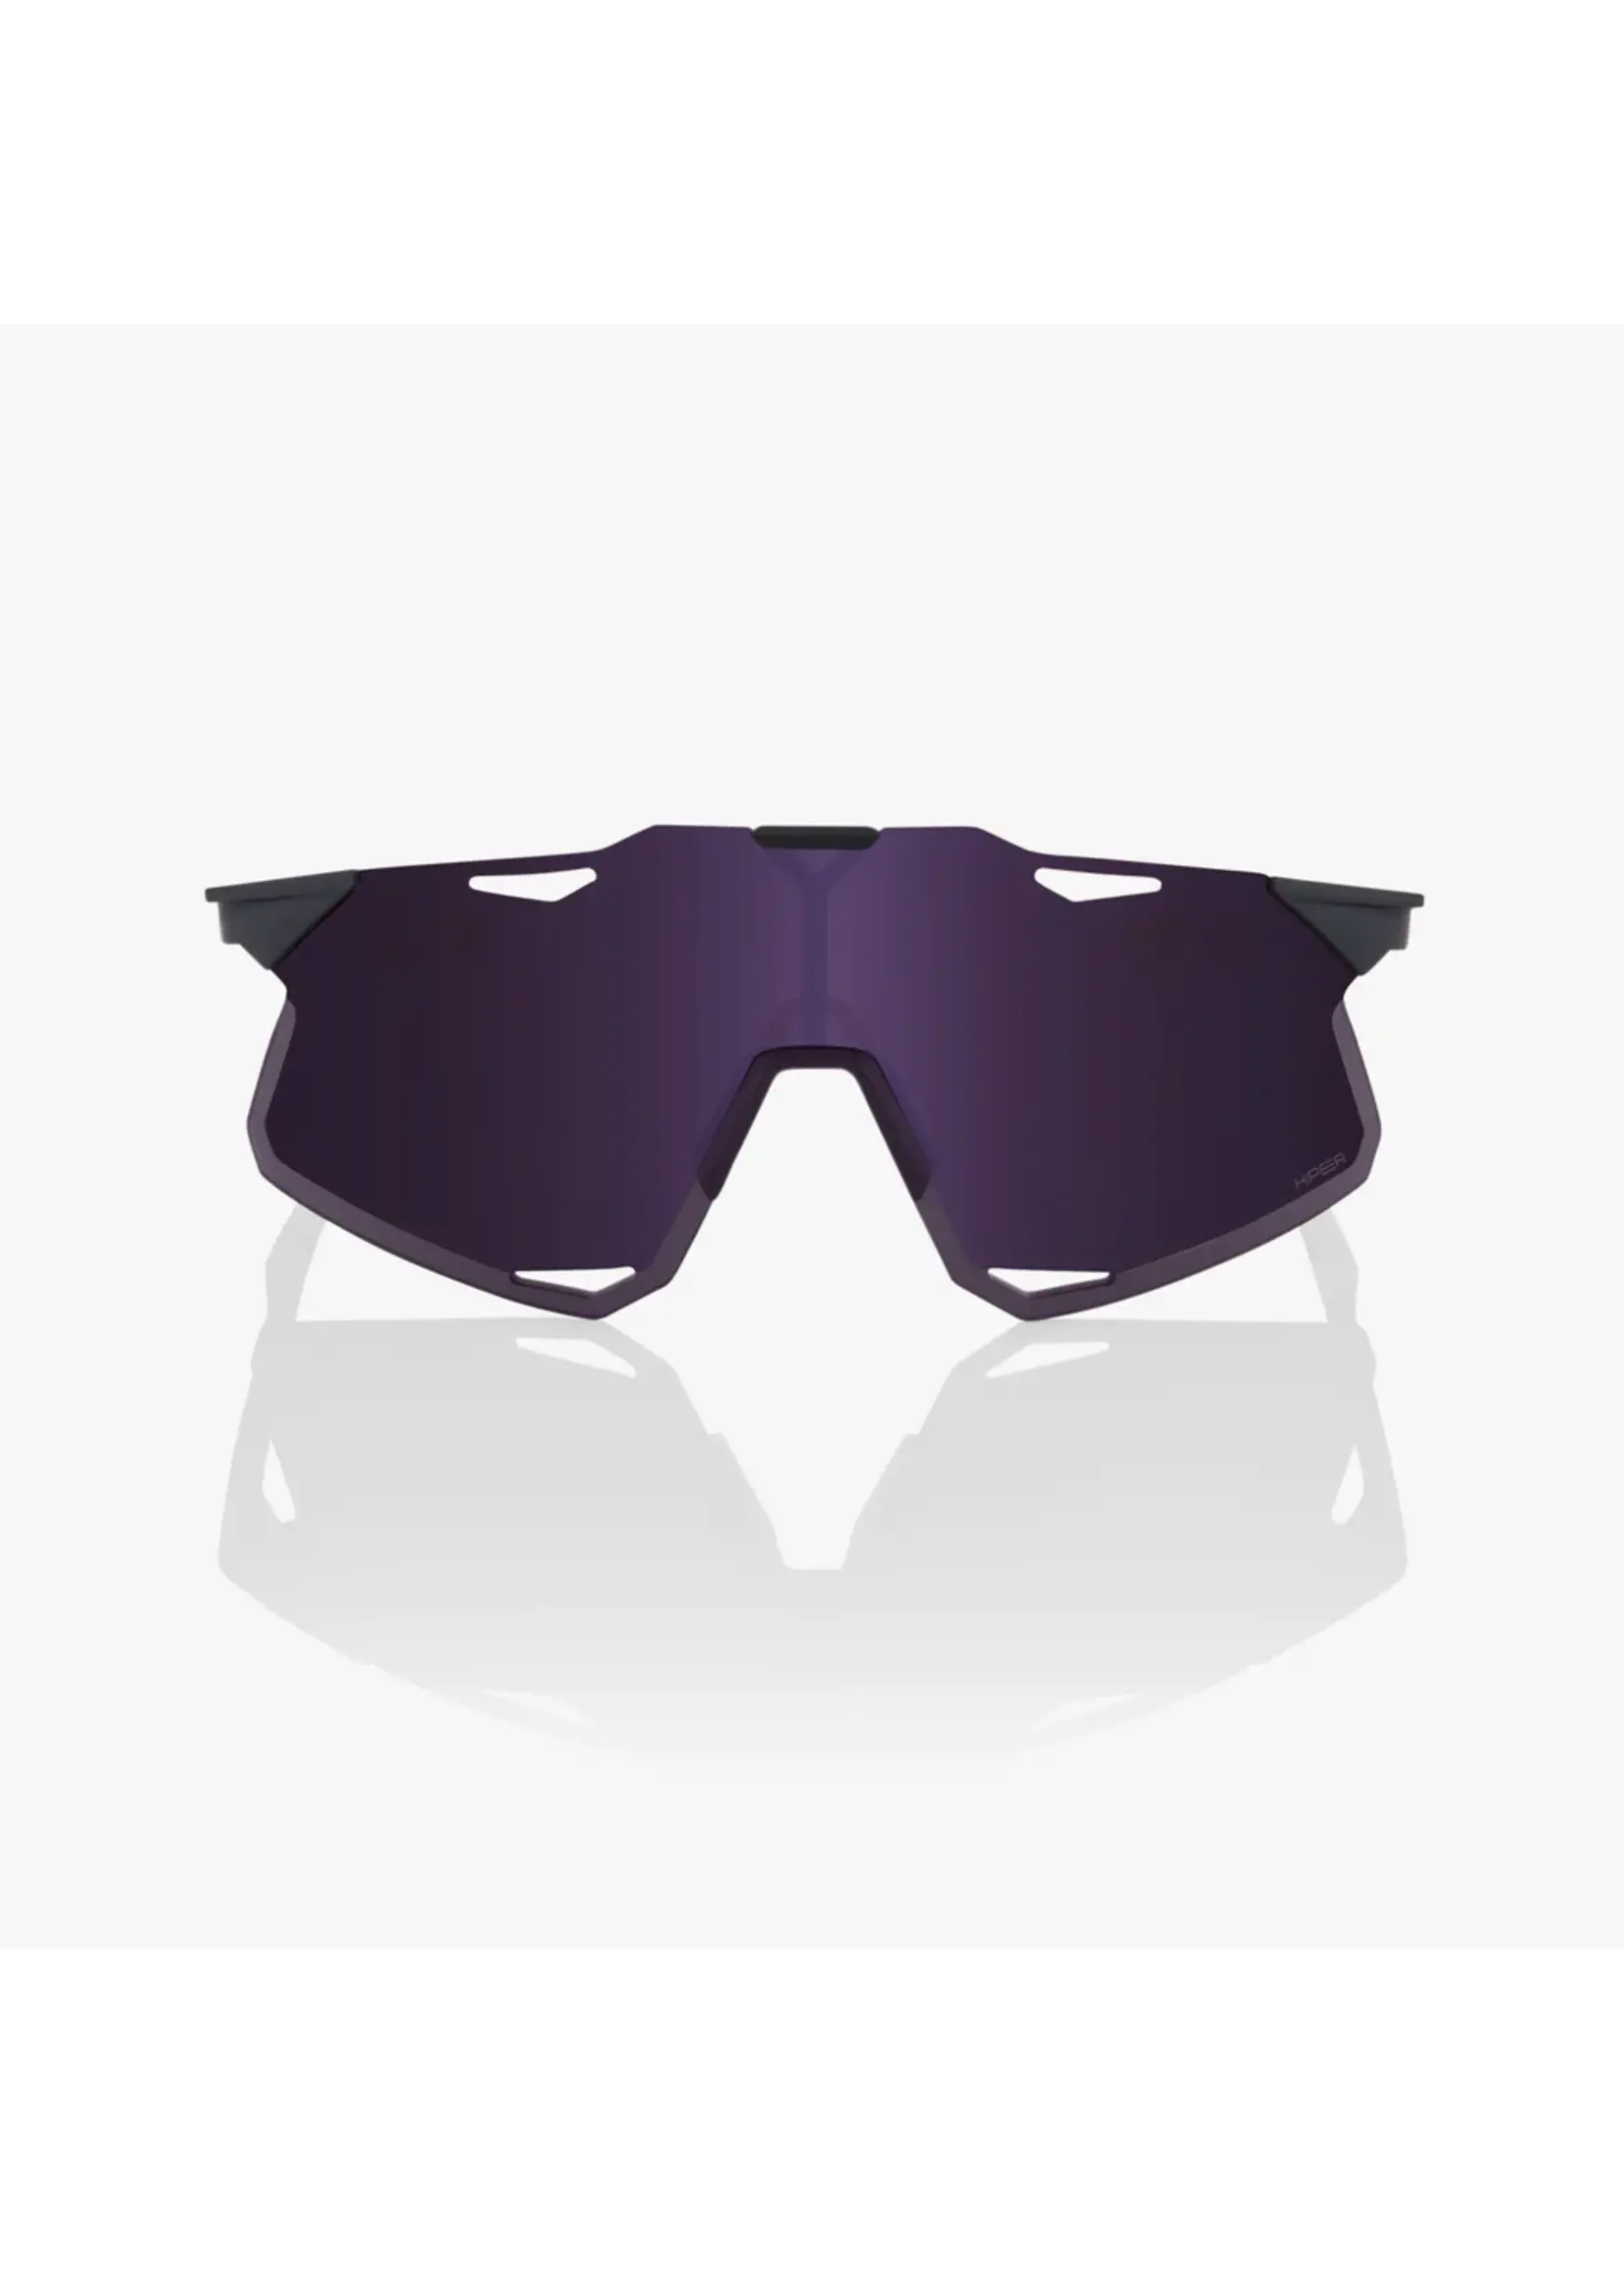 100 Percent 100% Hypercraft Sunglasses - Matte Metallic Digital Brights - Dark Purple Lens